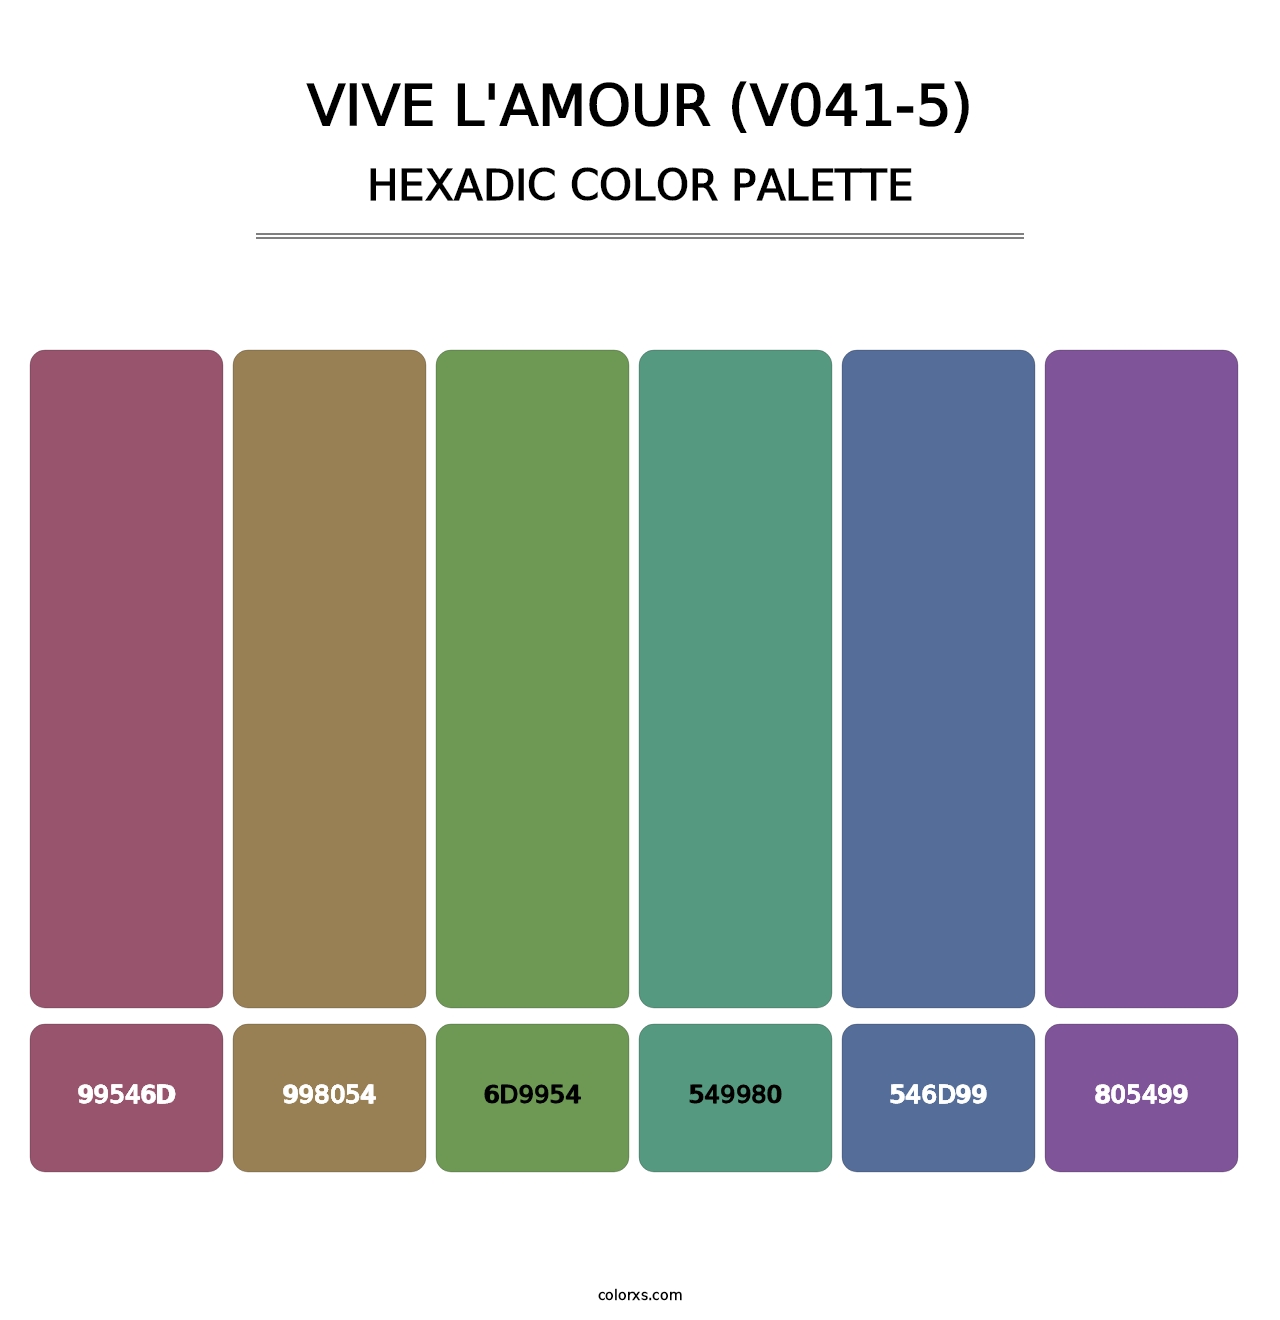 Vive l'amour (V041-5) - Hexadic Color Palette